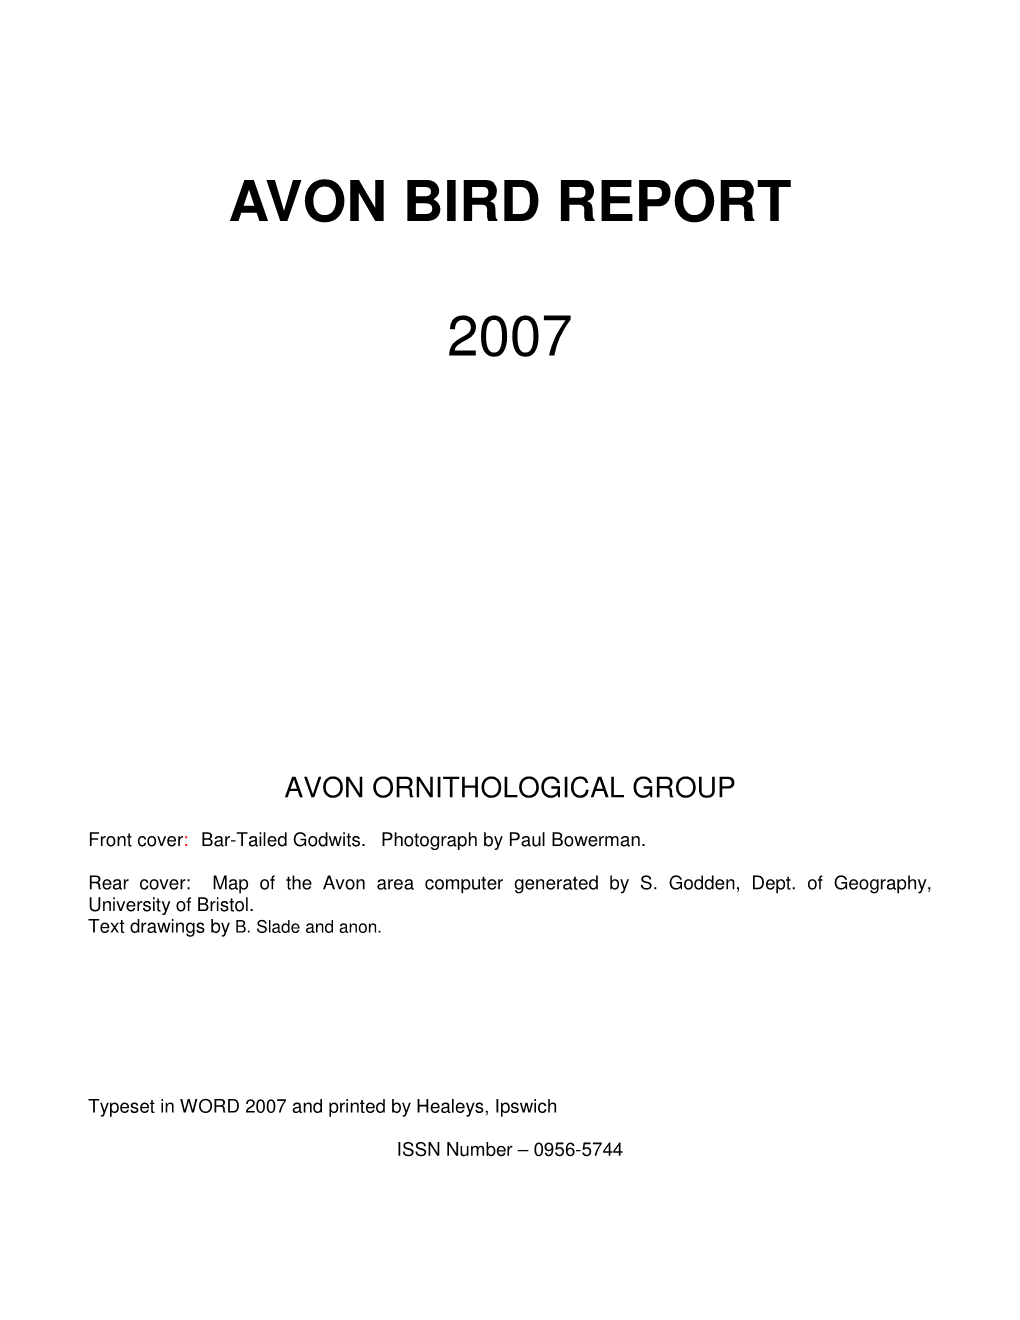 Avon Bird Report 2007